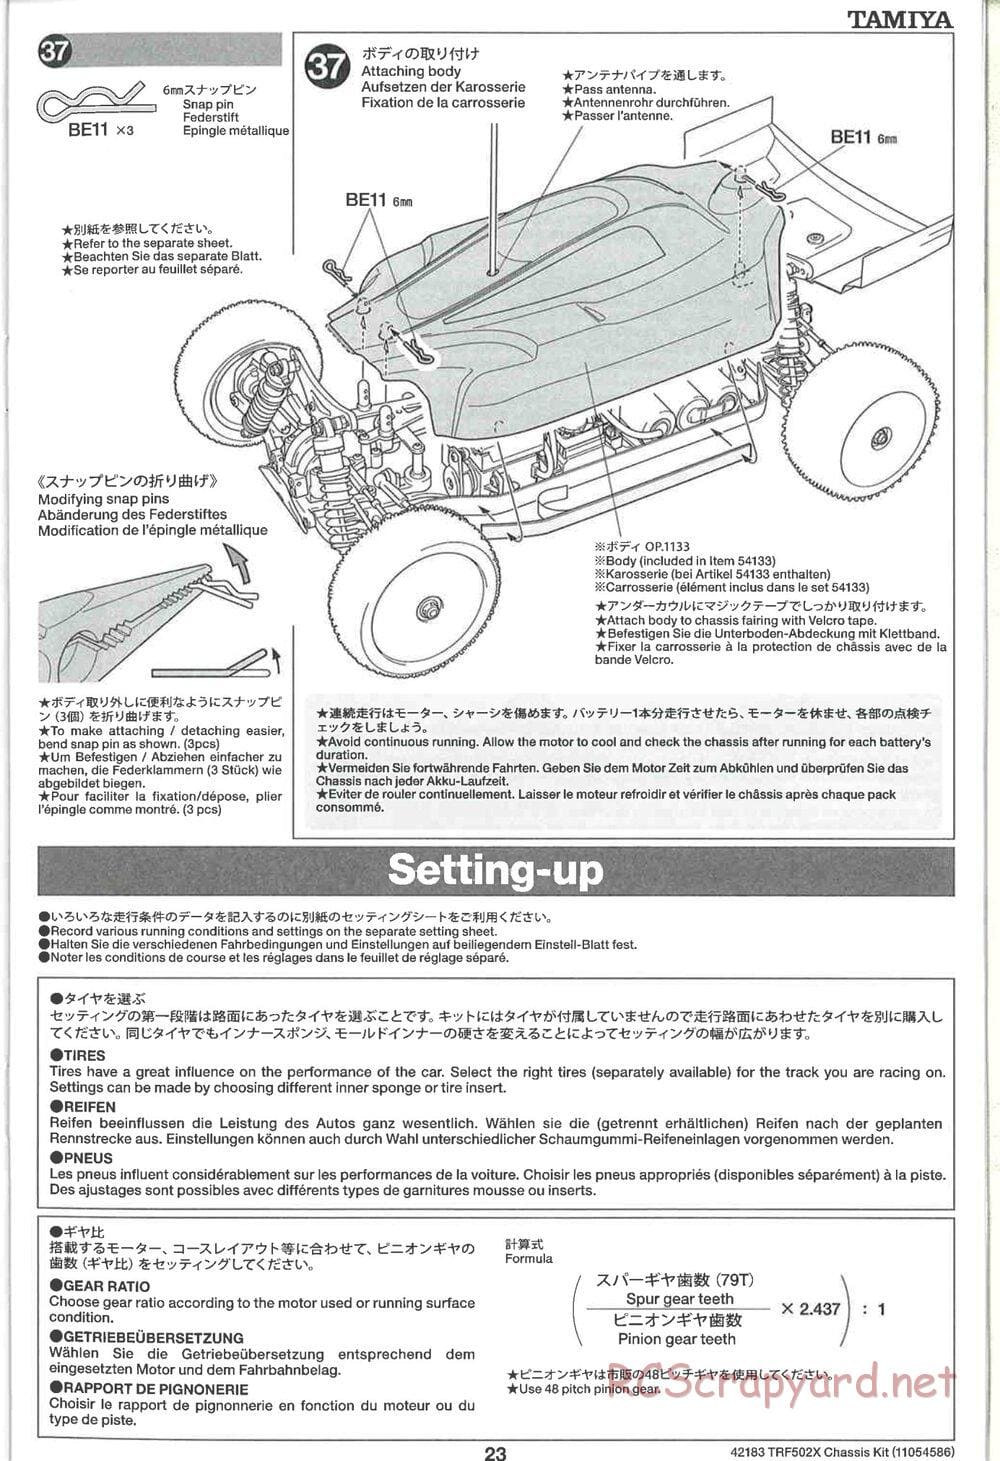 Tamiya - TRF502X Chassis - Manual - Page 23